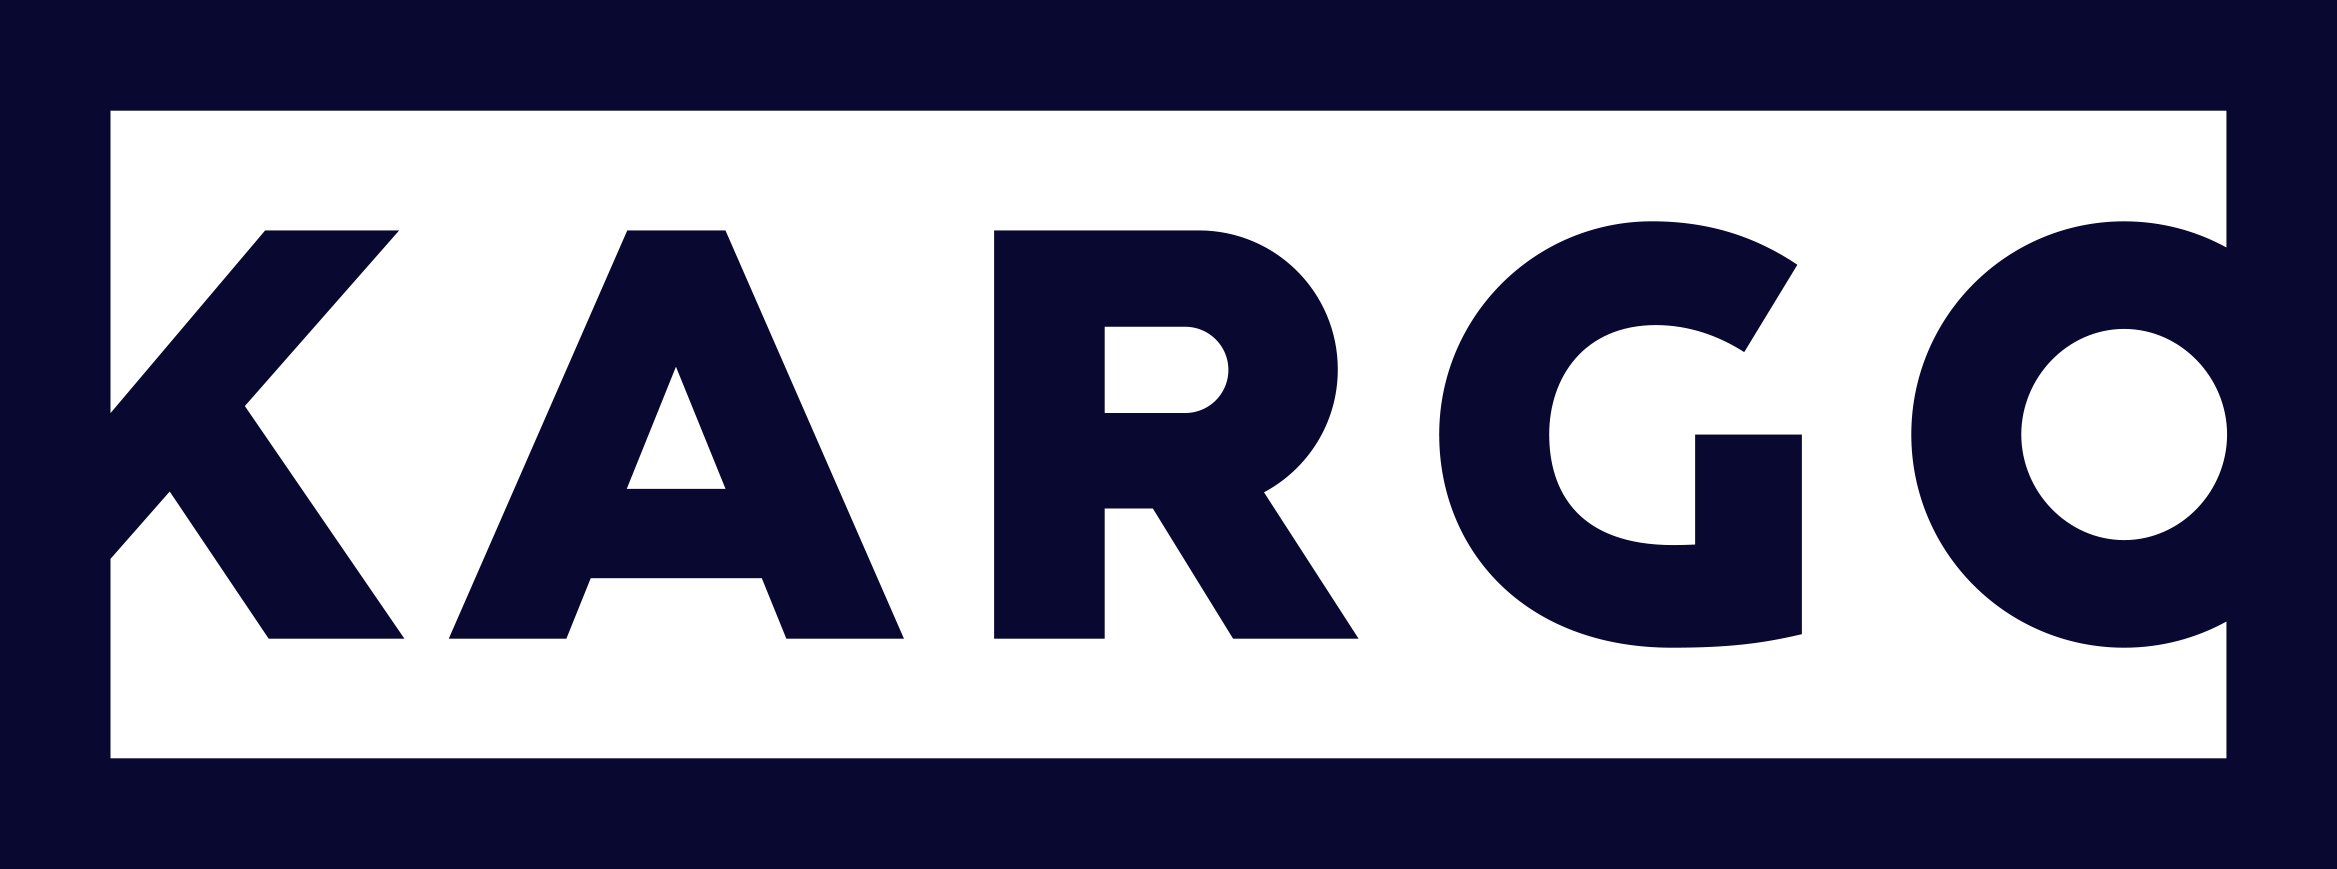 https://optimapublicrelations.com/wp-content/uploads/2023/03/NEW_Kargo_logo_horizontal_navy.png